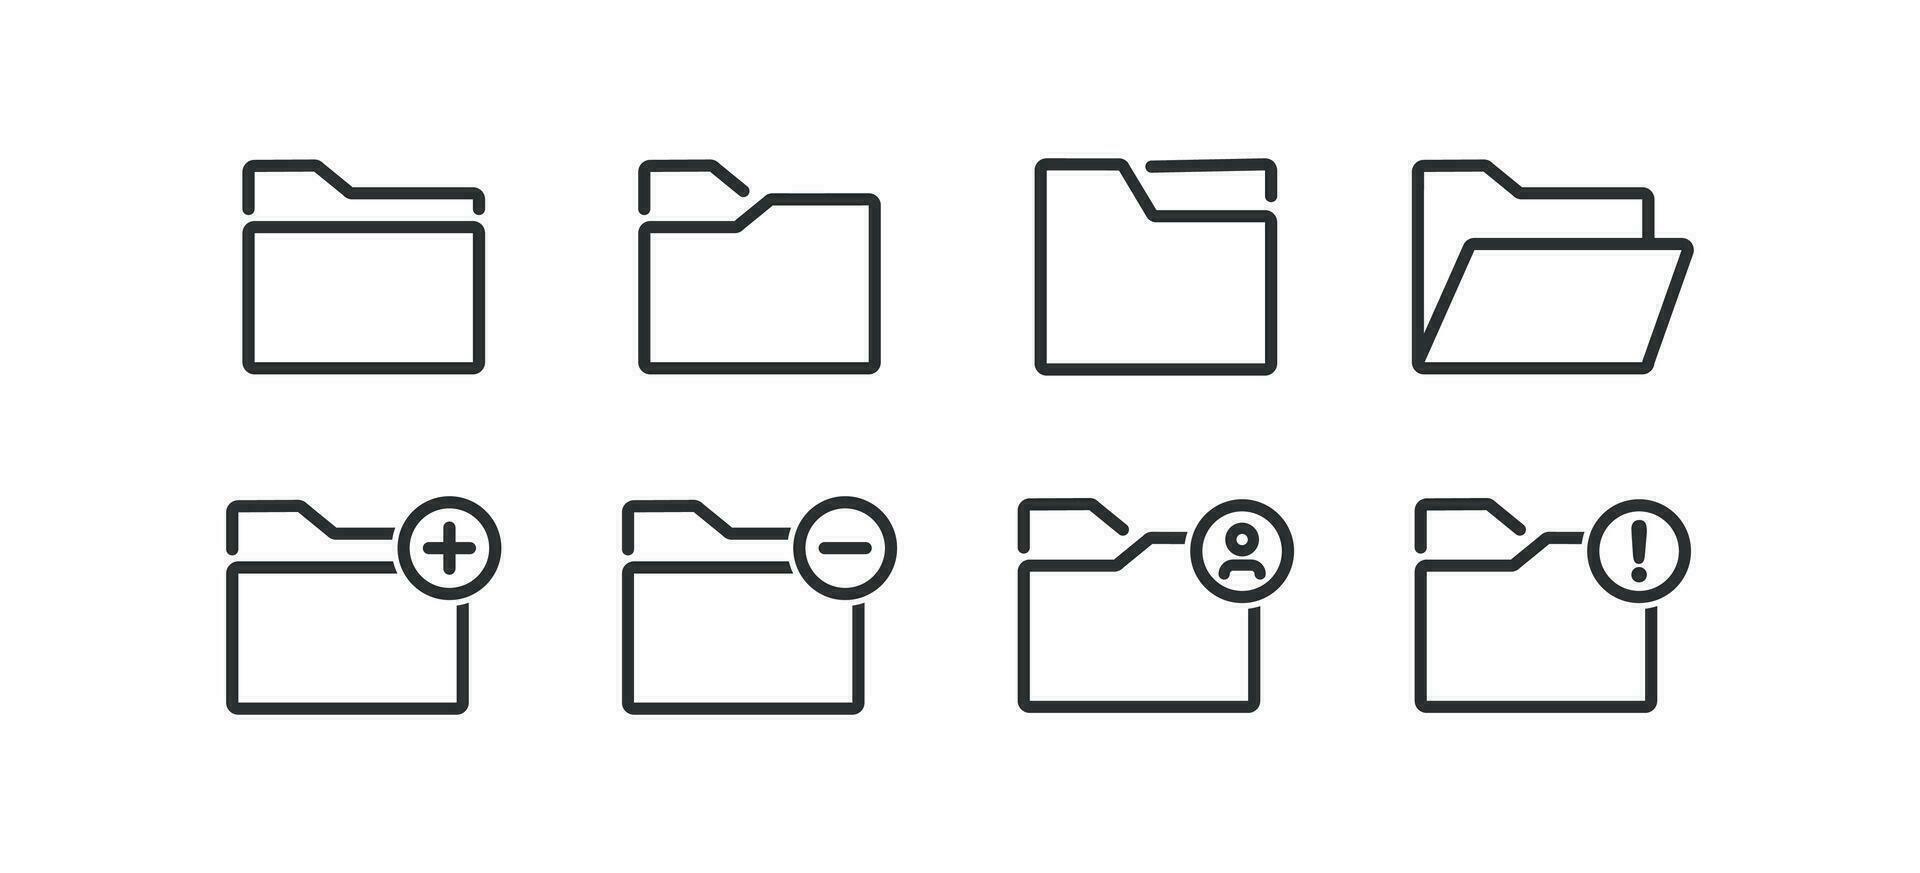 File folder icon set. File portfolio illustration symbol. Sign document vector